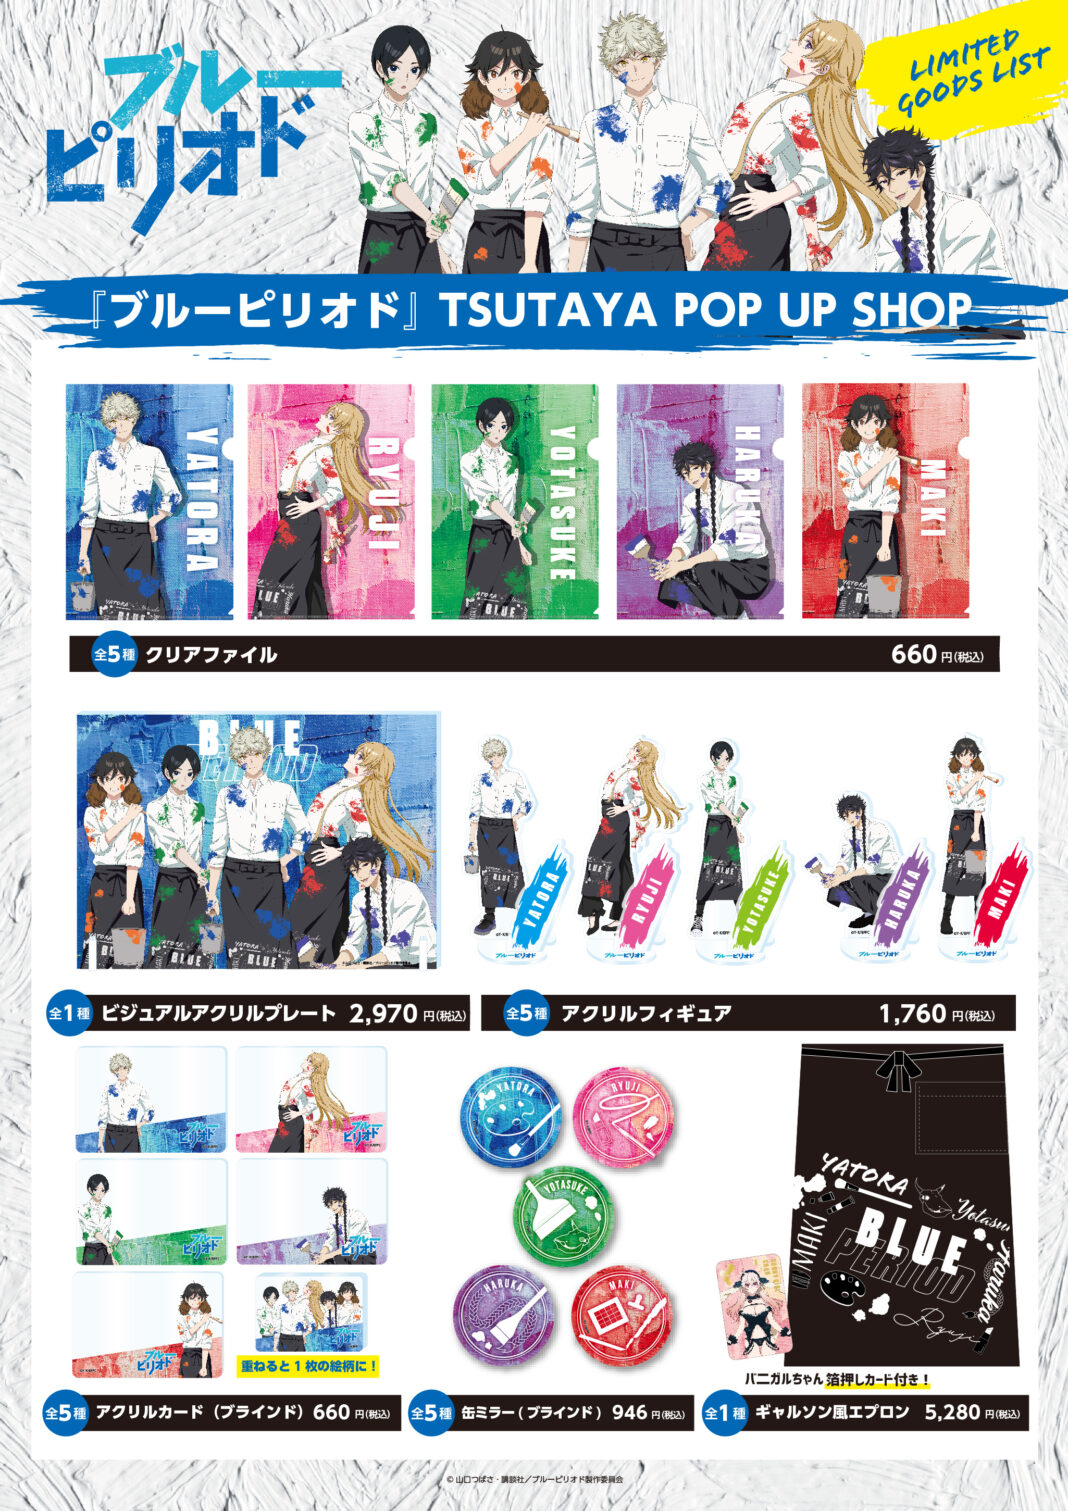 TVアニメ『ブルーピリオド』×TSUTAYA POP UP SHOPにて、描き下ろしを使用したグッズを販売！のメイン画像